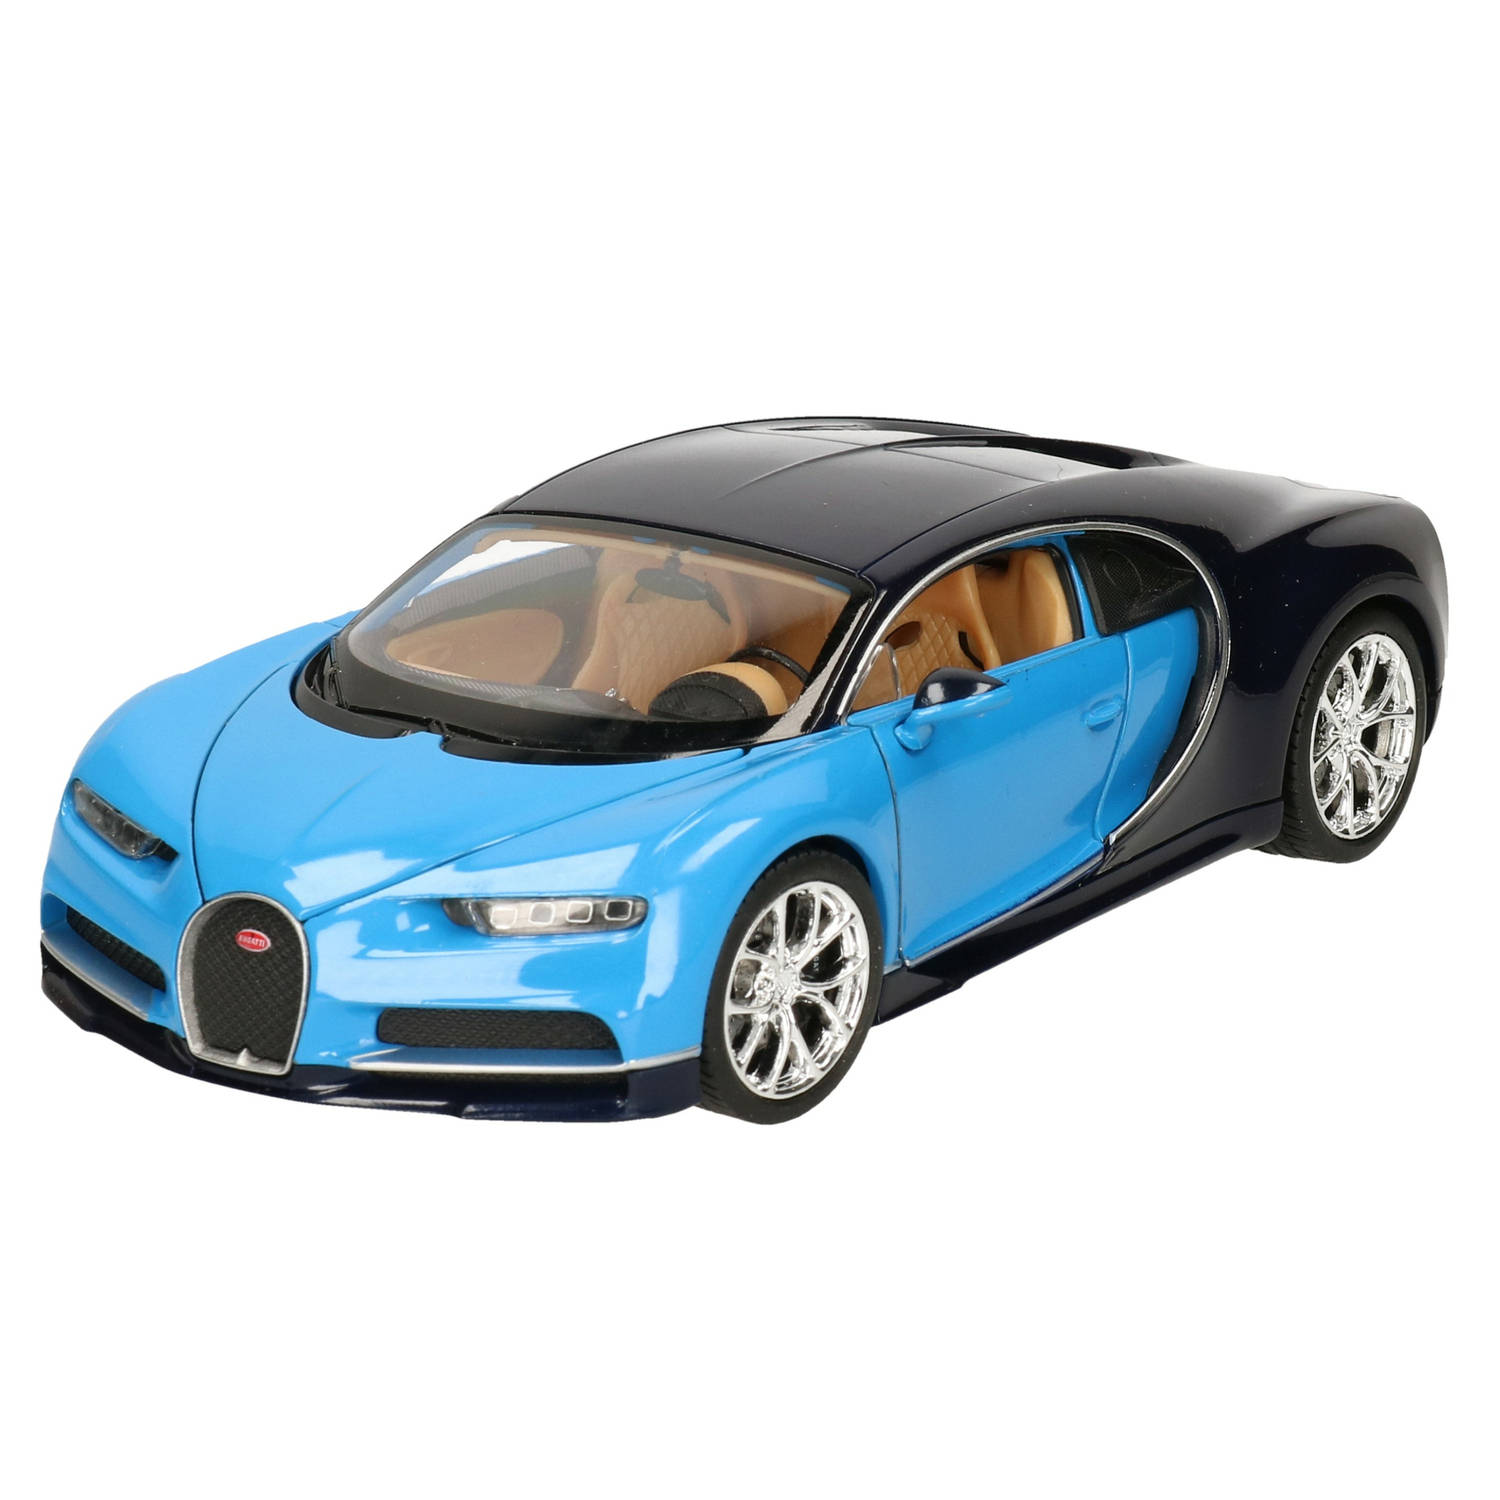 Modelauto-speelgoedauto Bugatti Chiron 2017 blauw schaal 1:24-19 x 8 x 5 cm Speelgoed auto's